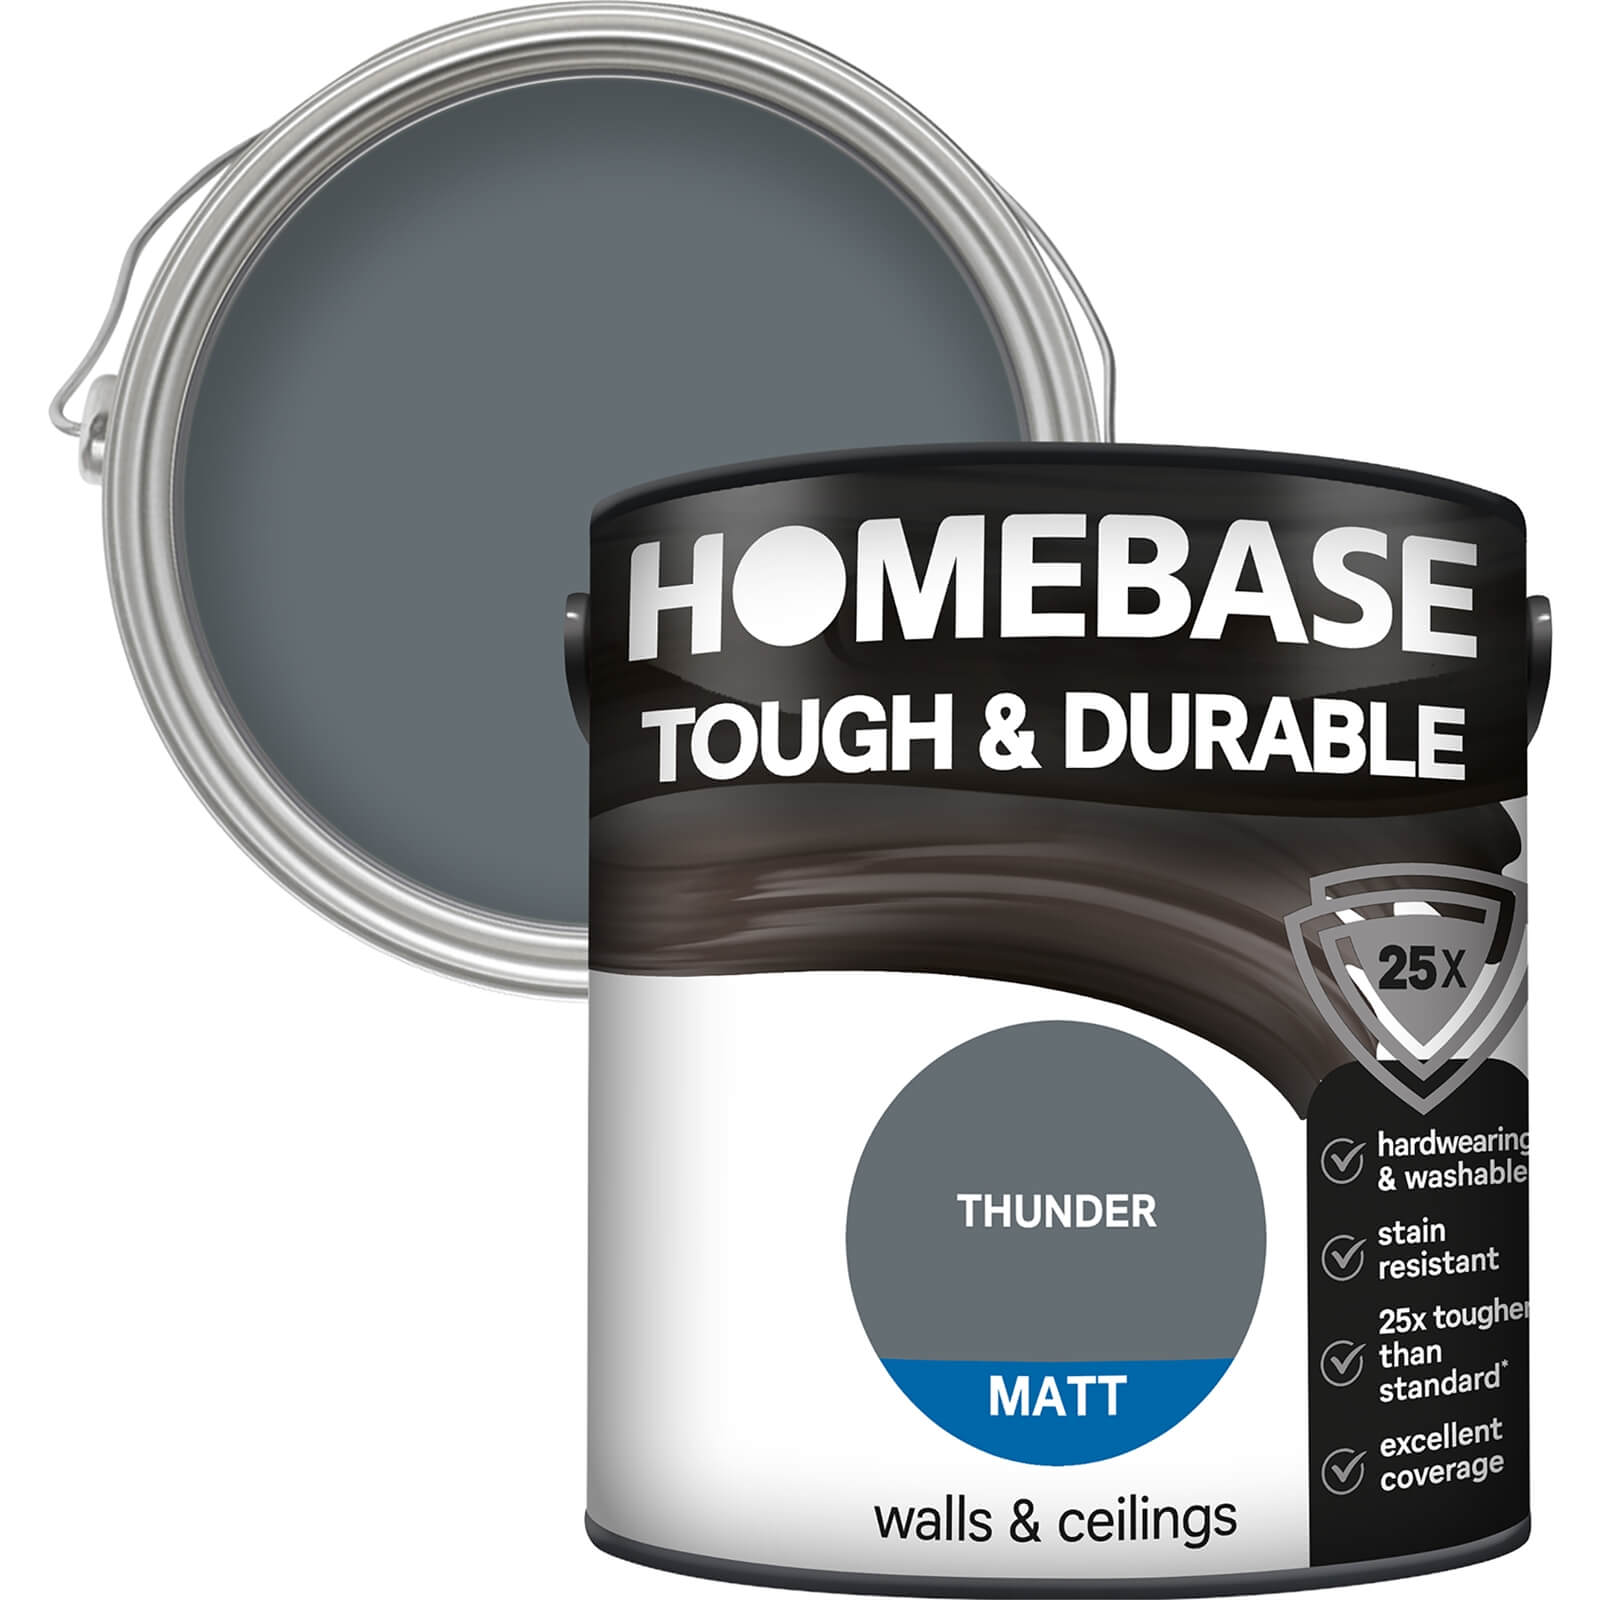 Homebase Tough & Durable Matt Paint Thunder - 2.5L